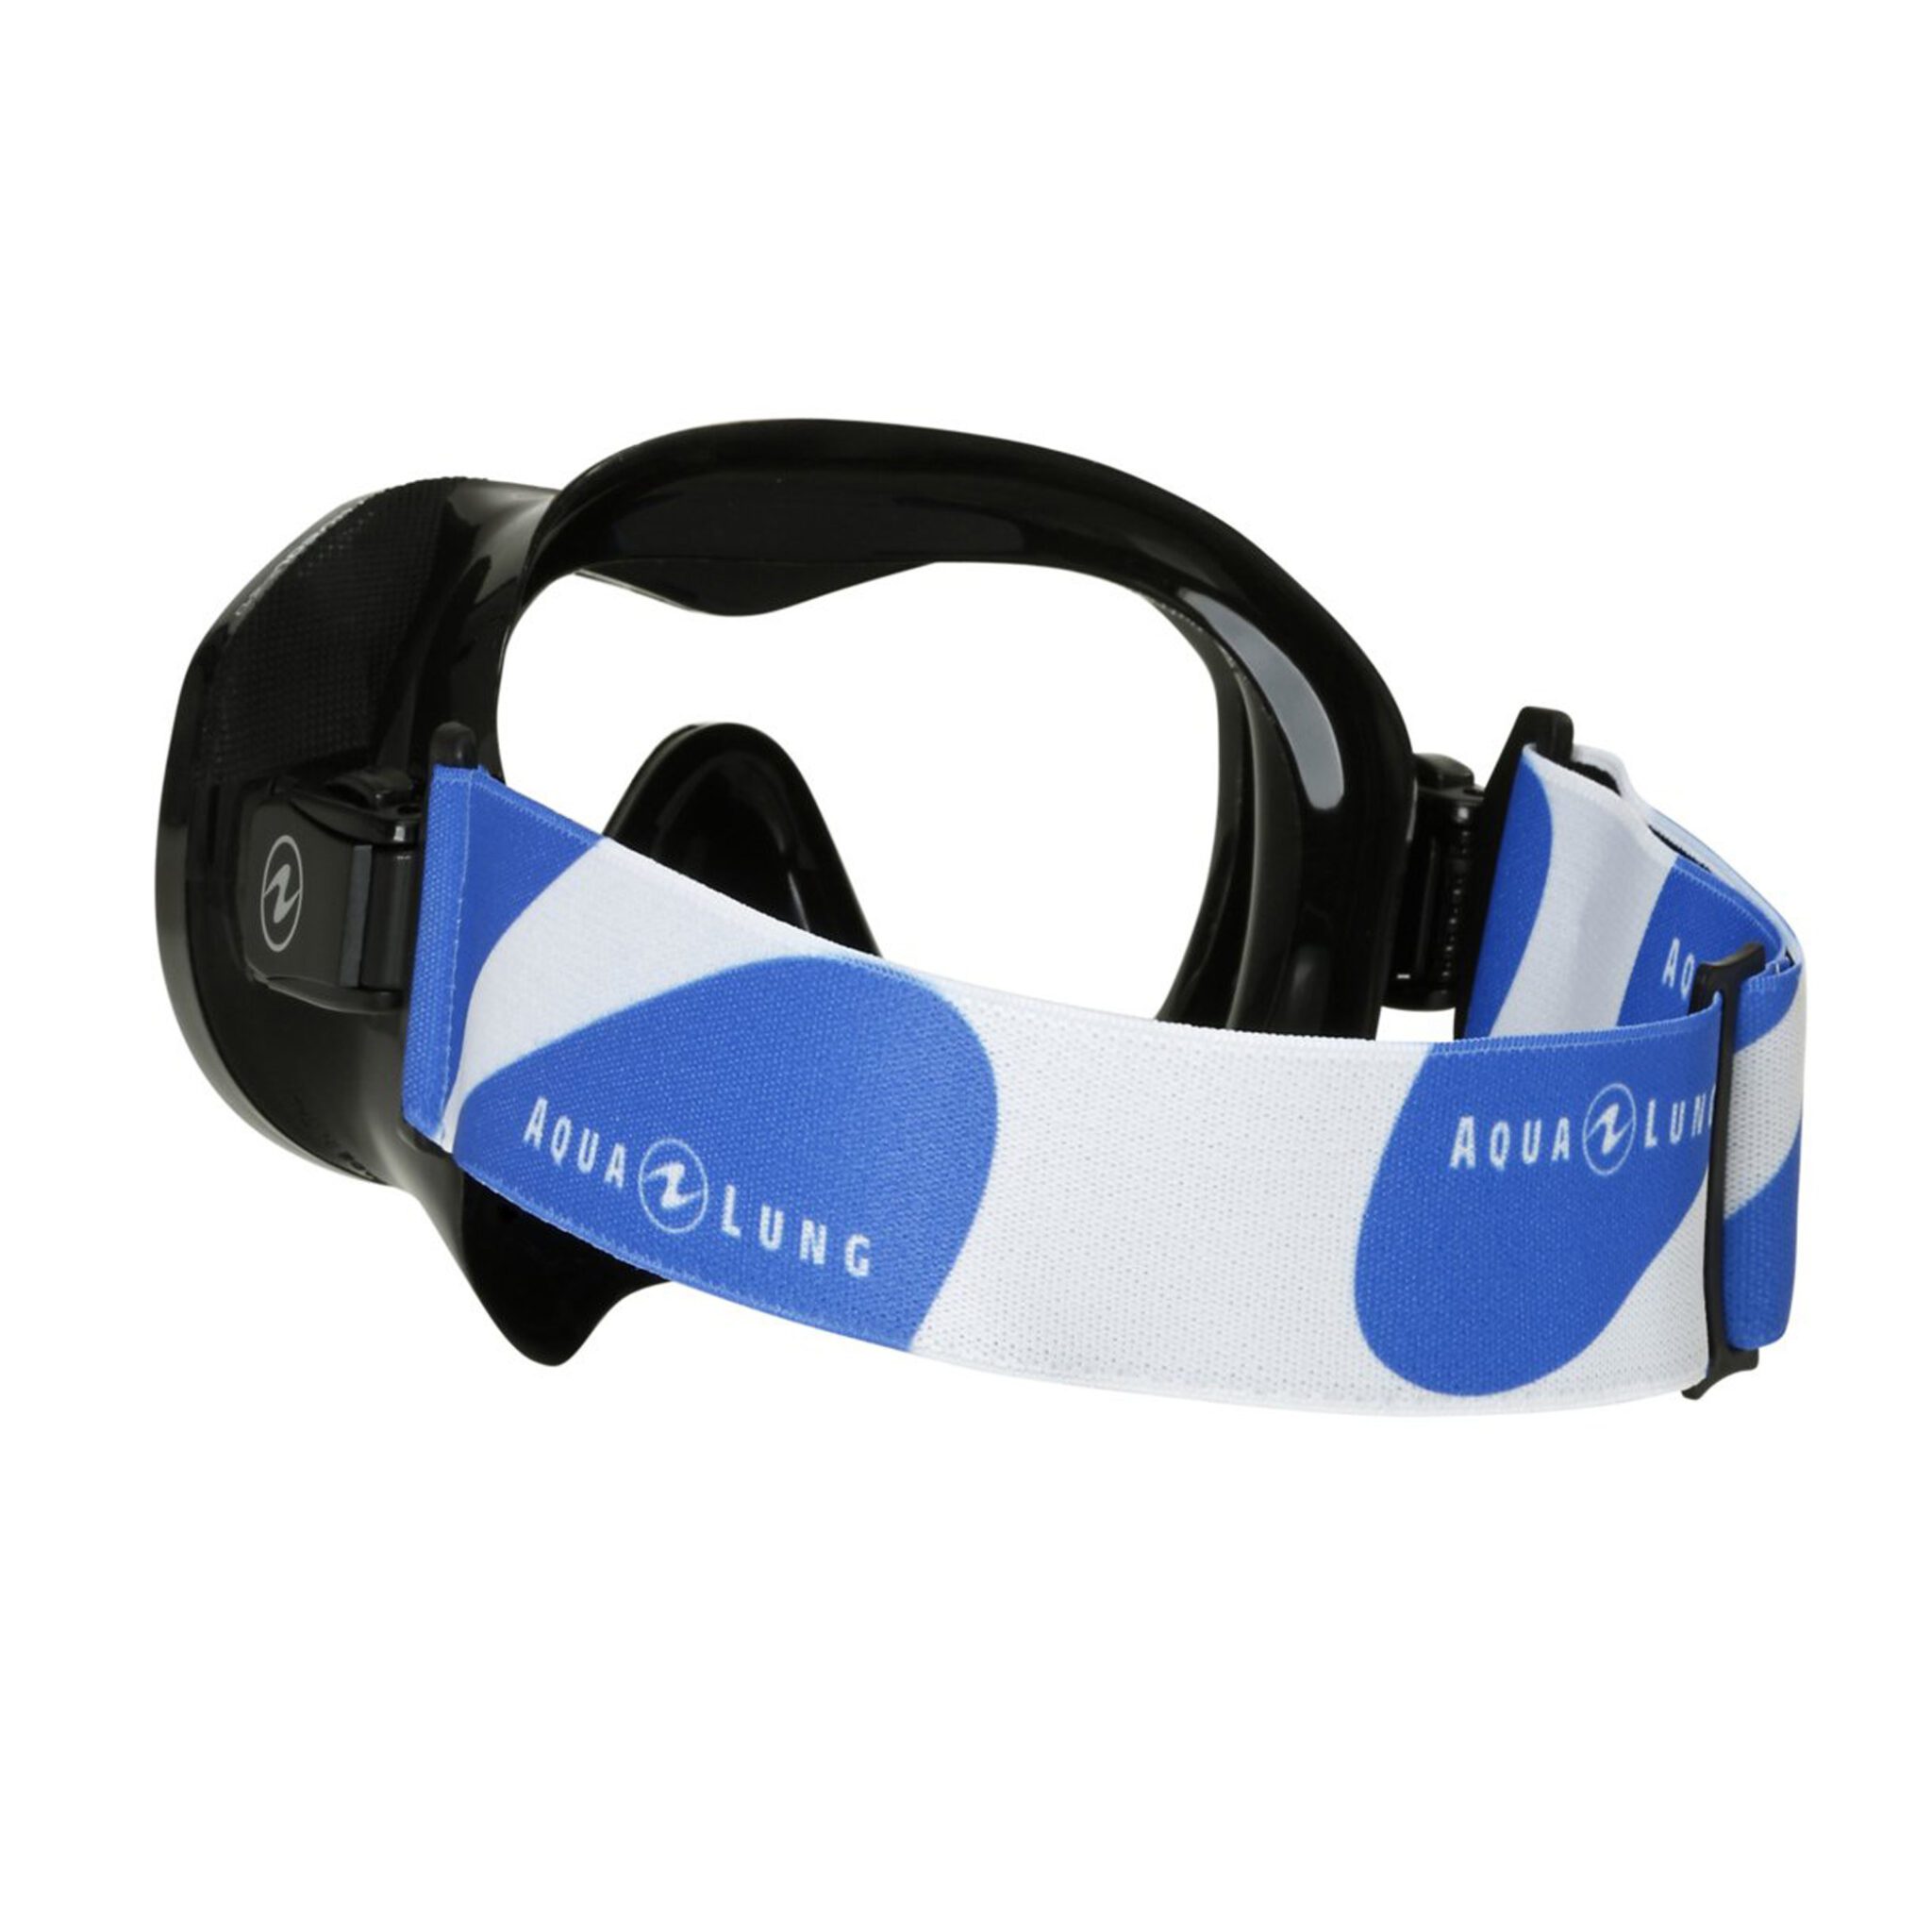 SCUBA Mask Straps - Personalised mask tamer - BCD straps